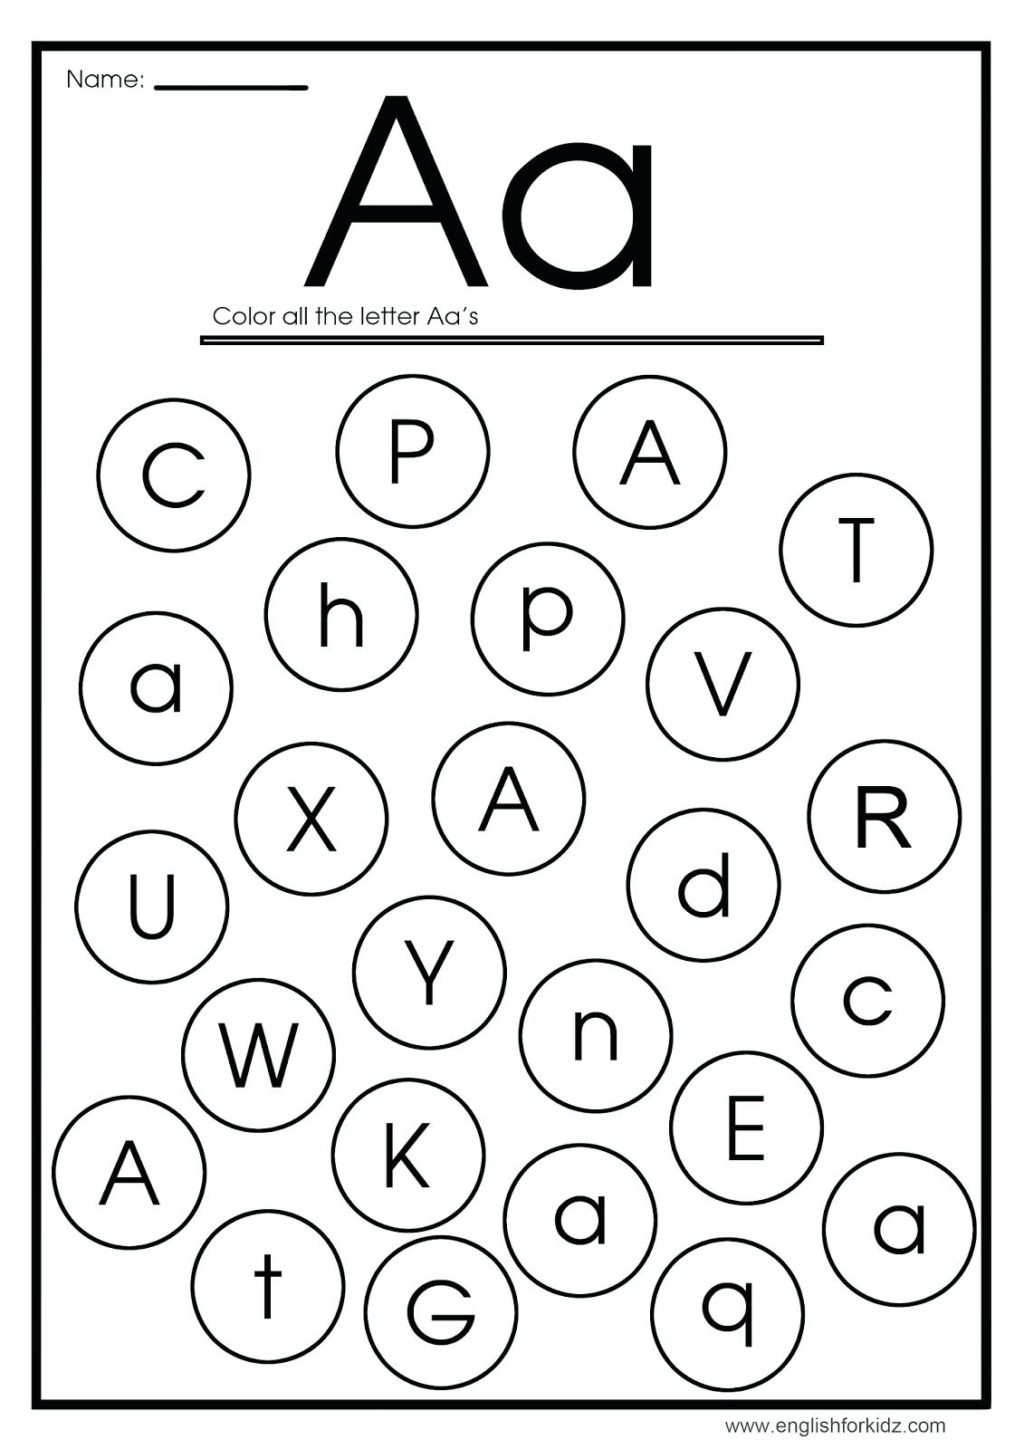 Worksheet ~ Letter Worksheets Comprehension With Questions within Alphabet Worksheets For Grade 1